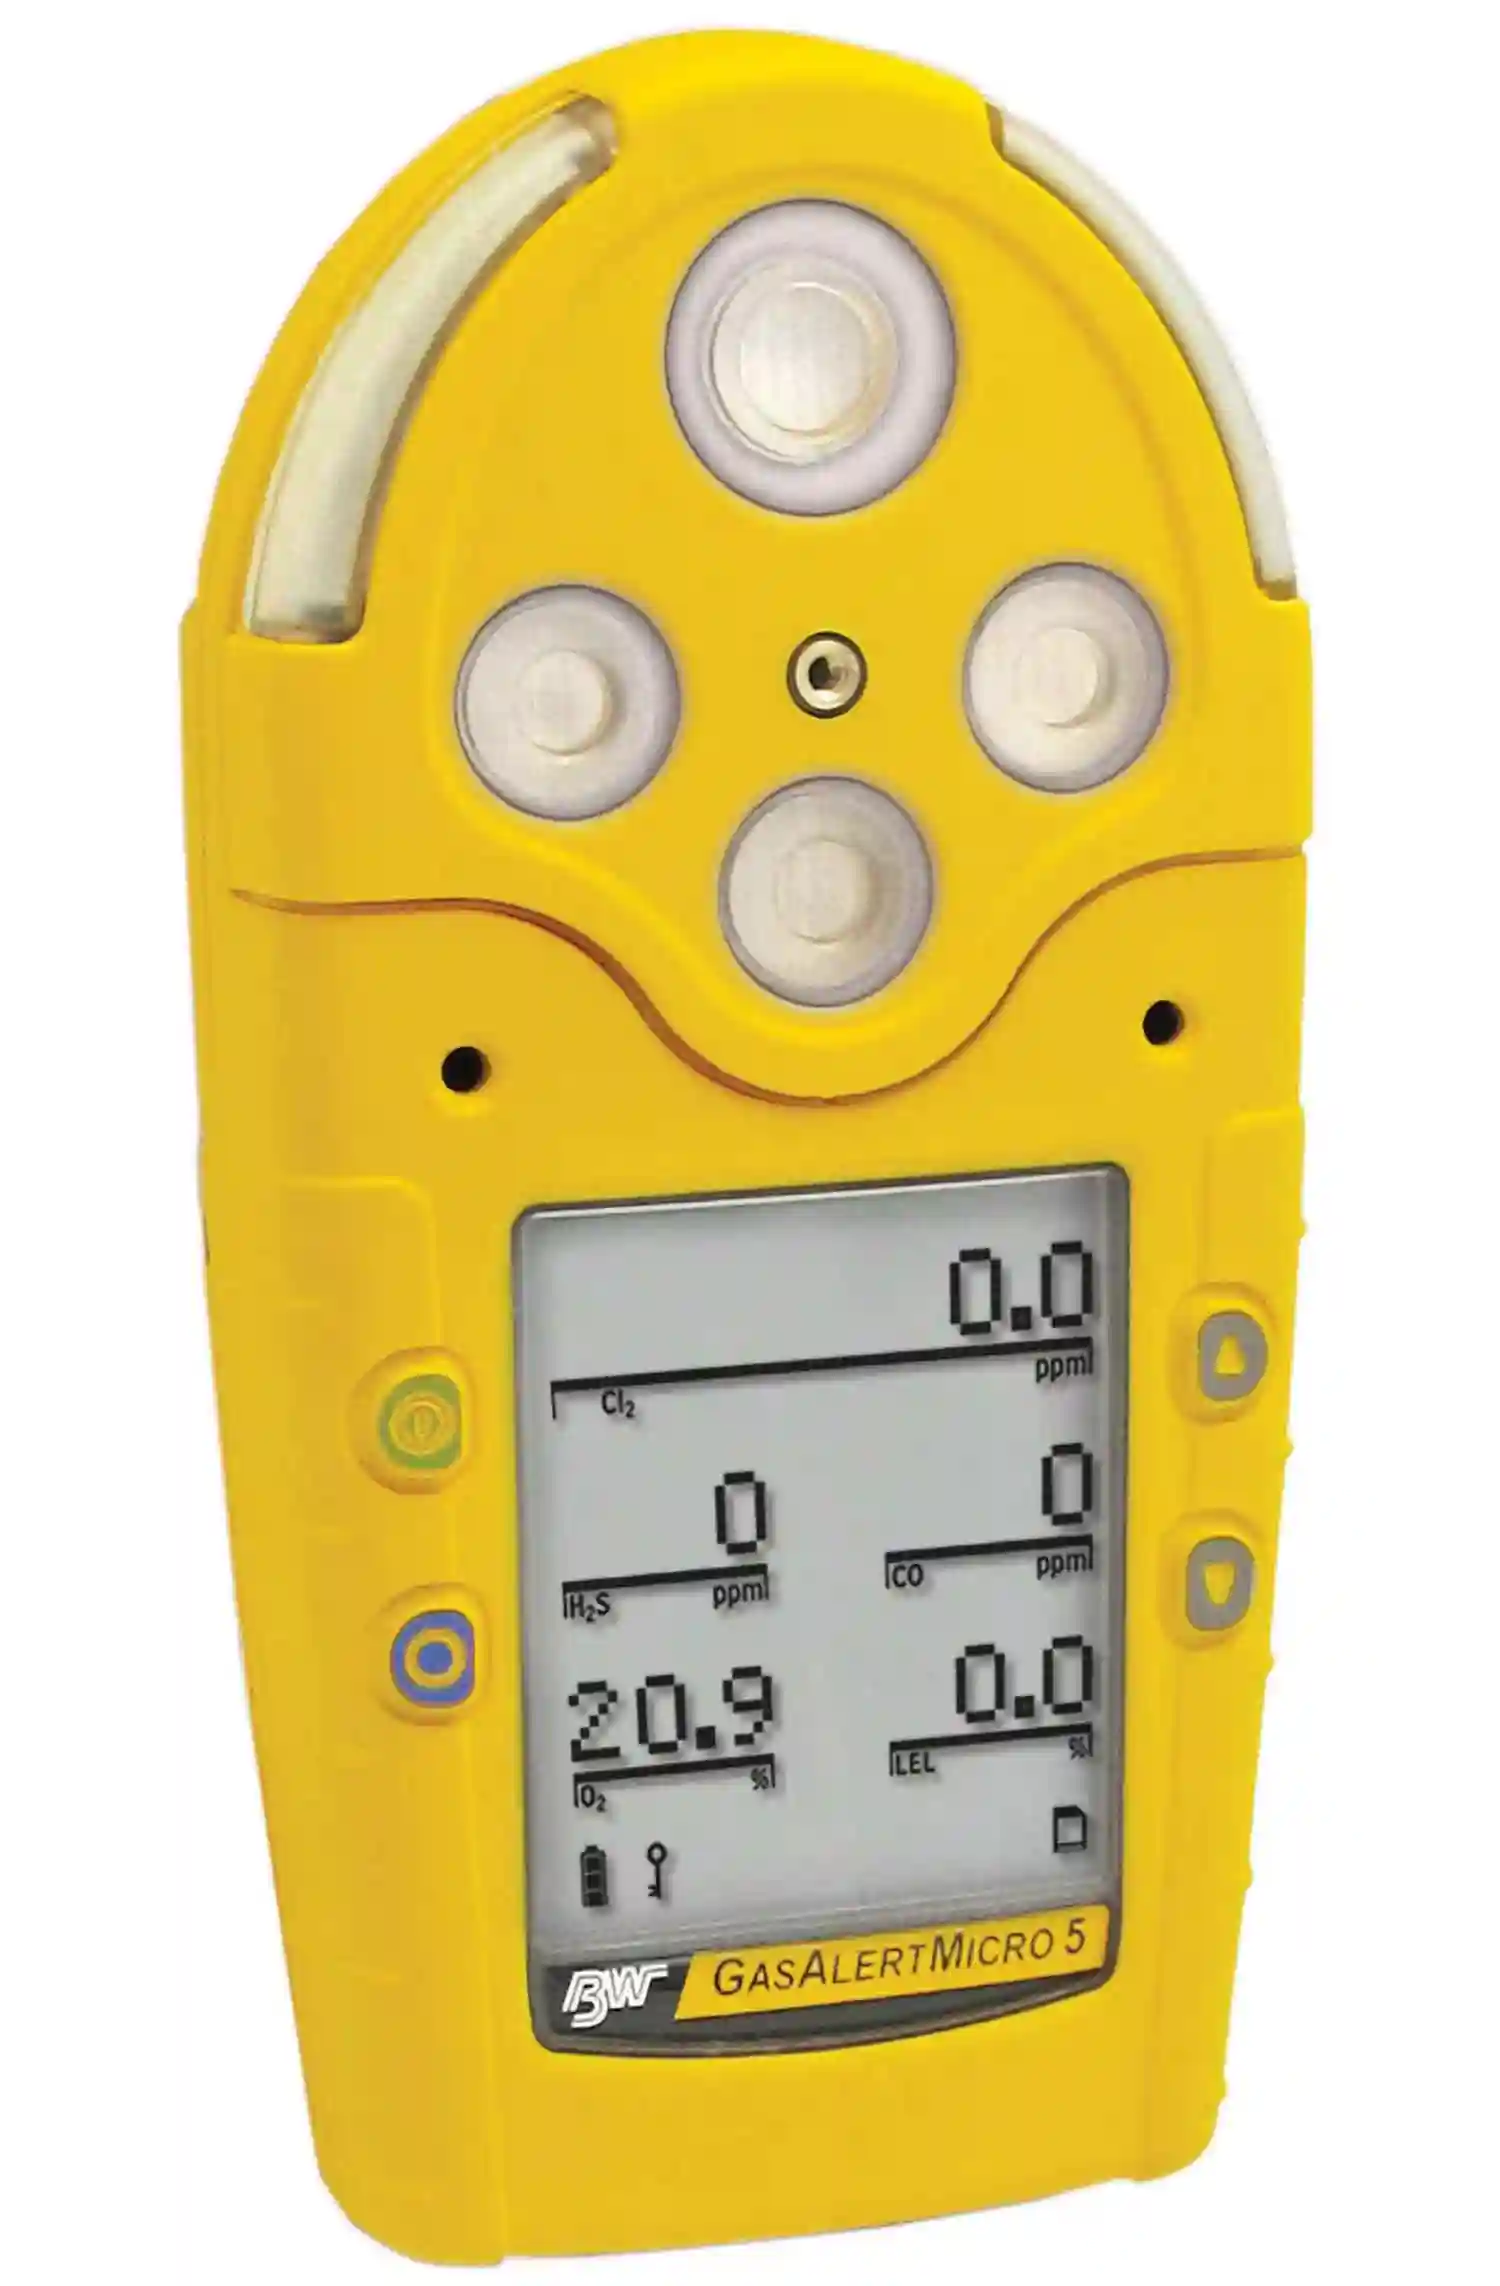 GasAlertMicro 5 Series Portable Gas Detector